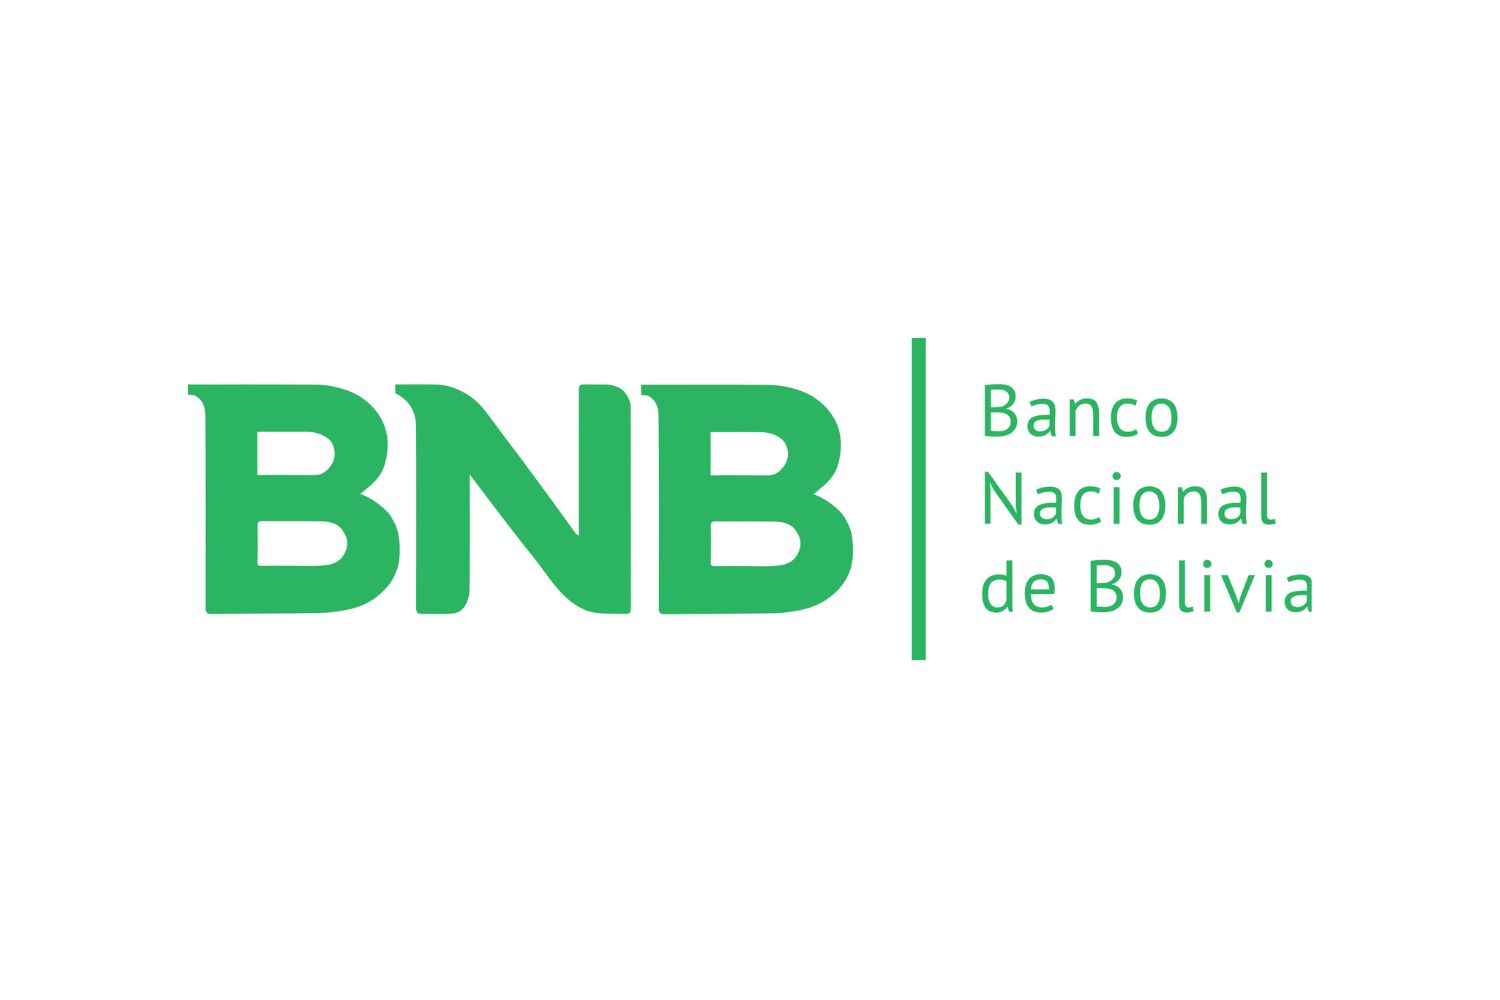 11-captivating-facts-about-banco-nacional-de-bolivia